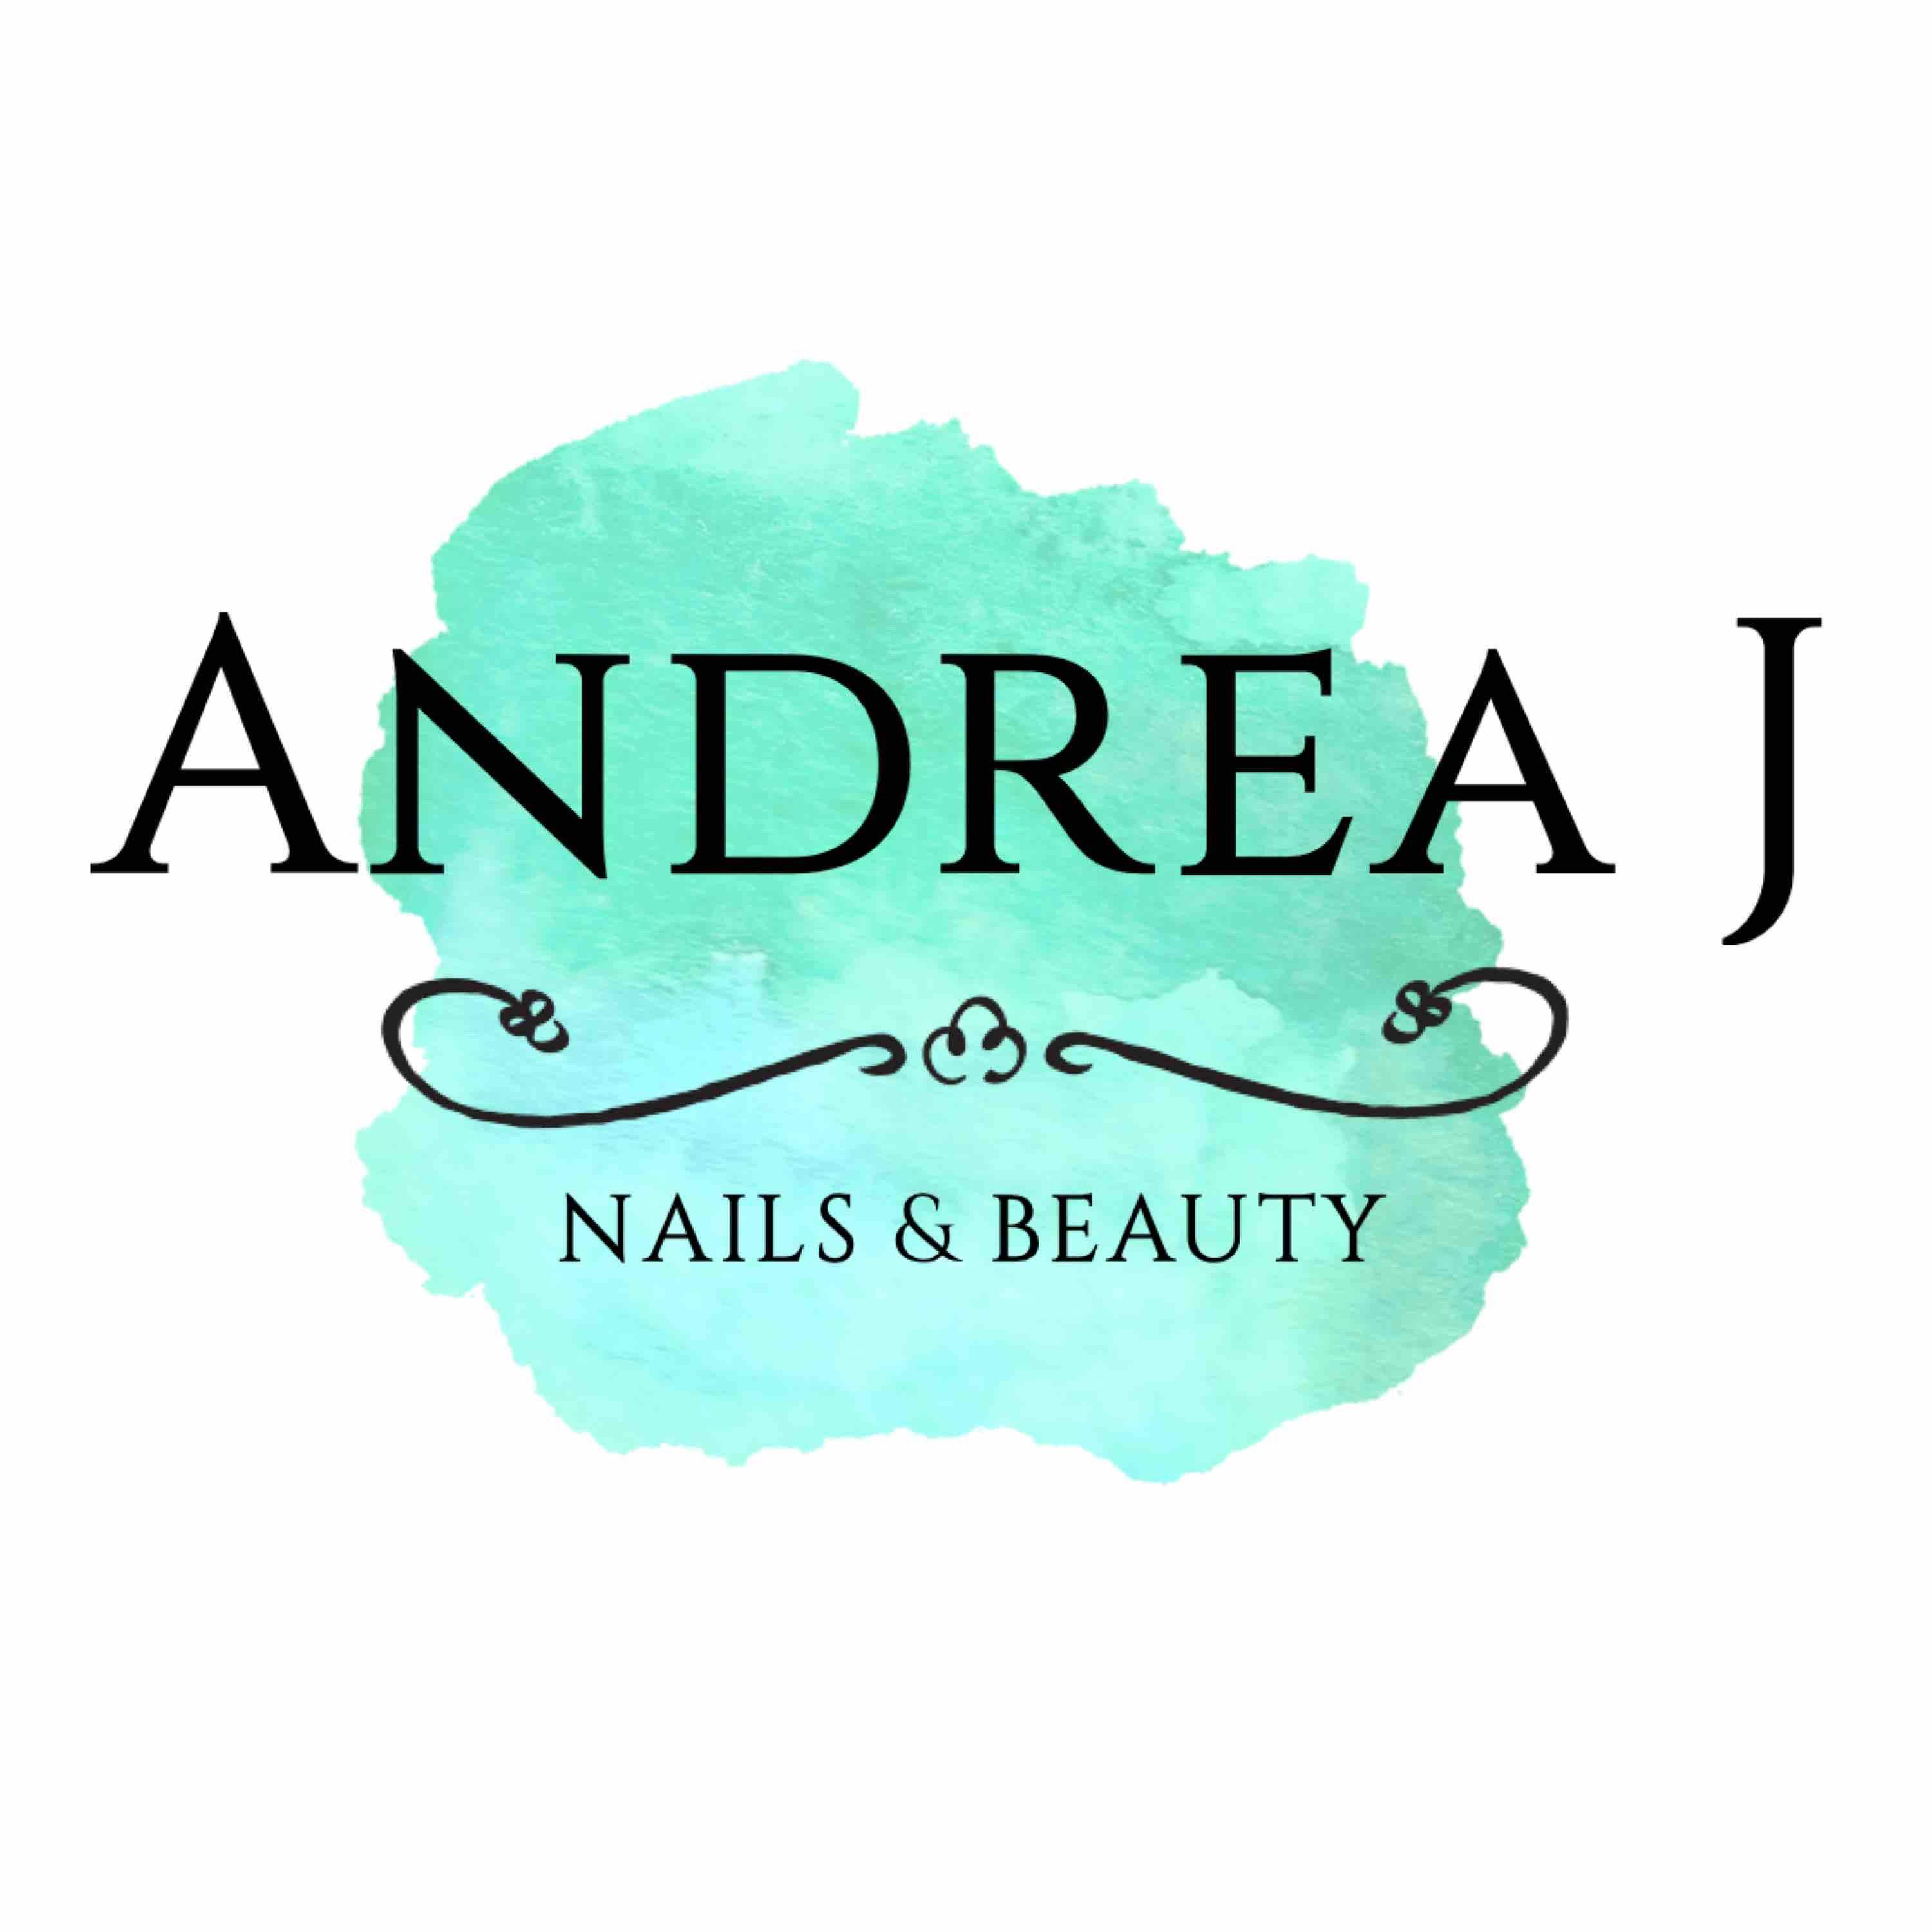 Andrea.J Nails & Beauty